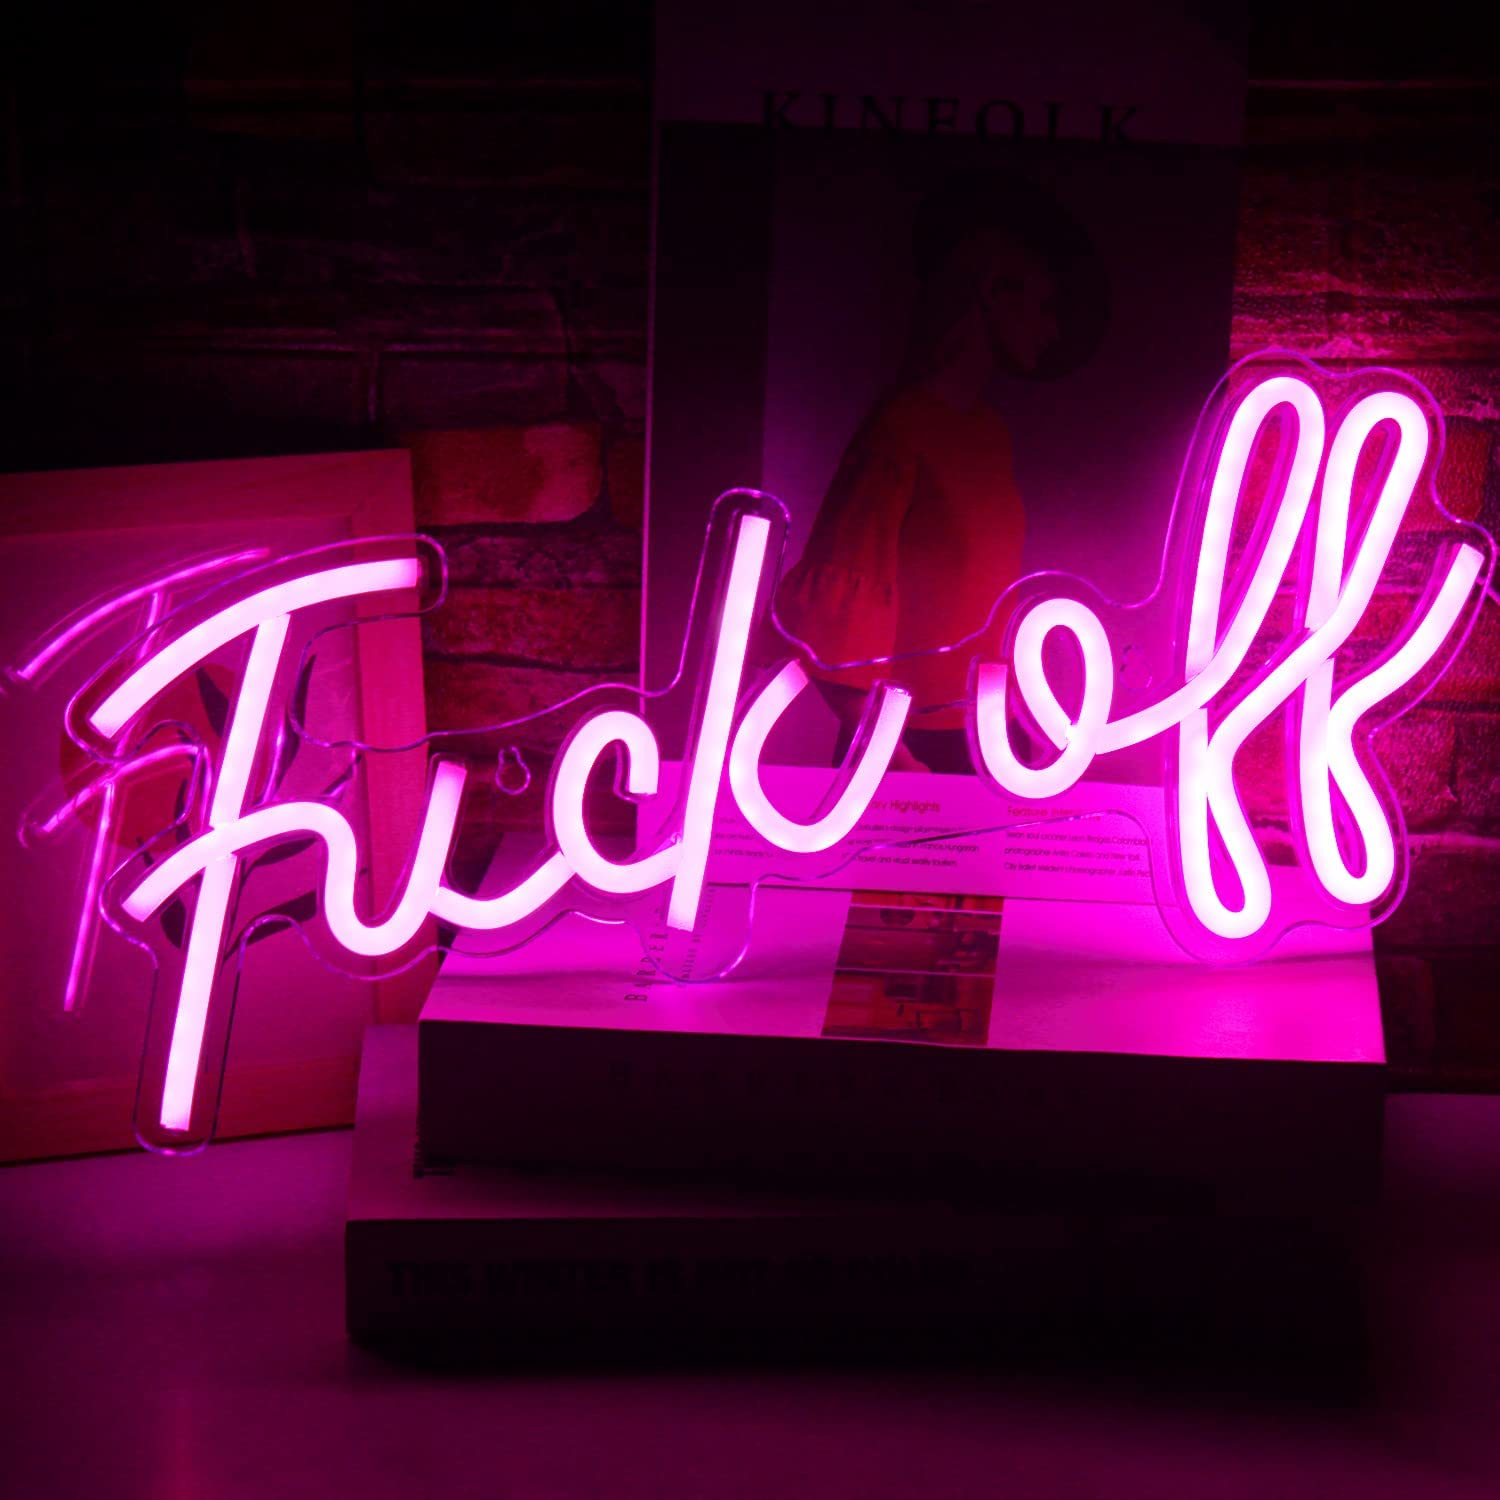 Fucx Off Led Neon Sign - NeonTitle